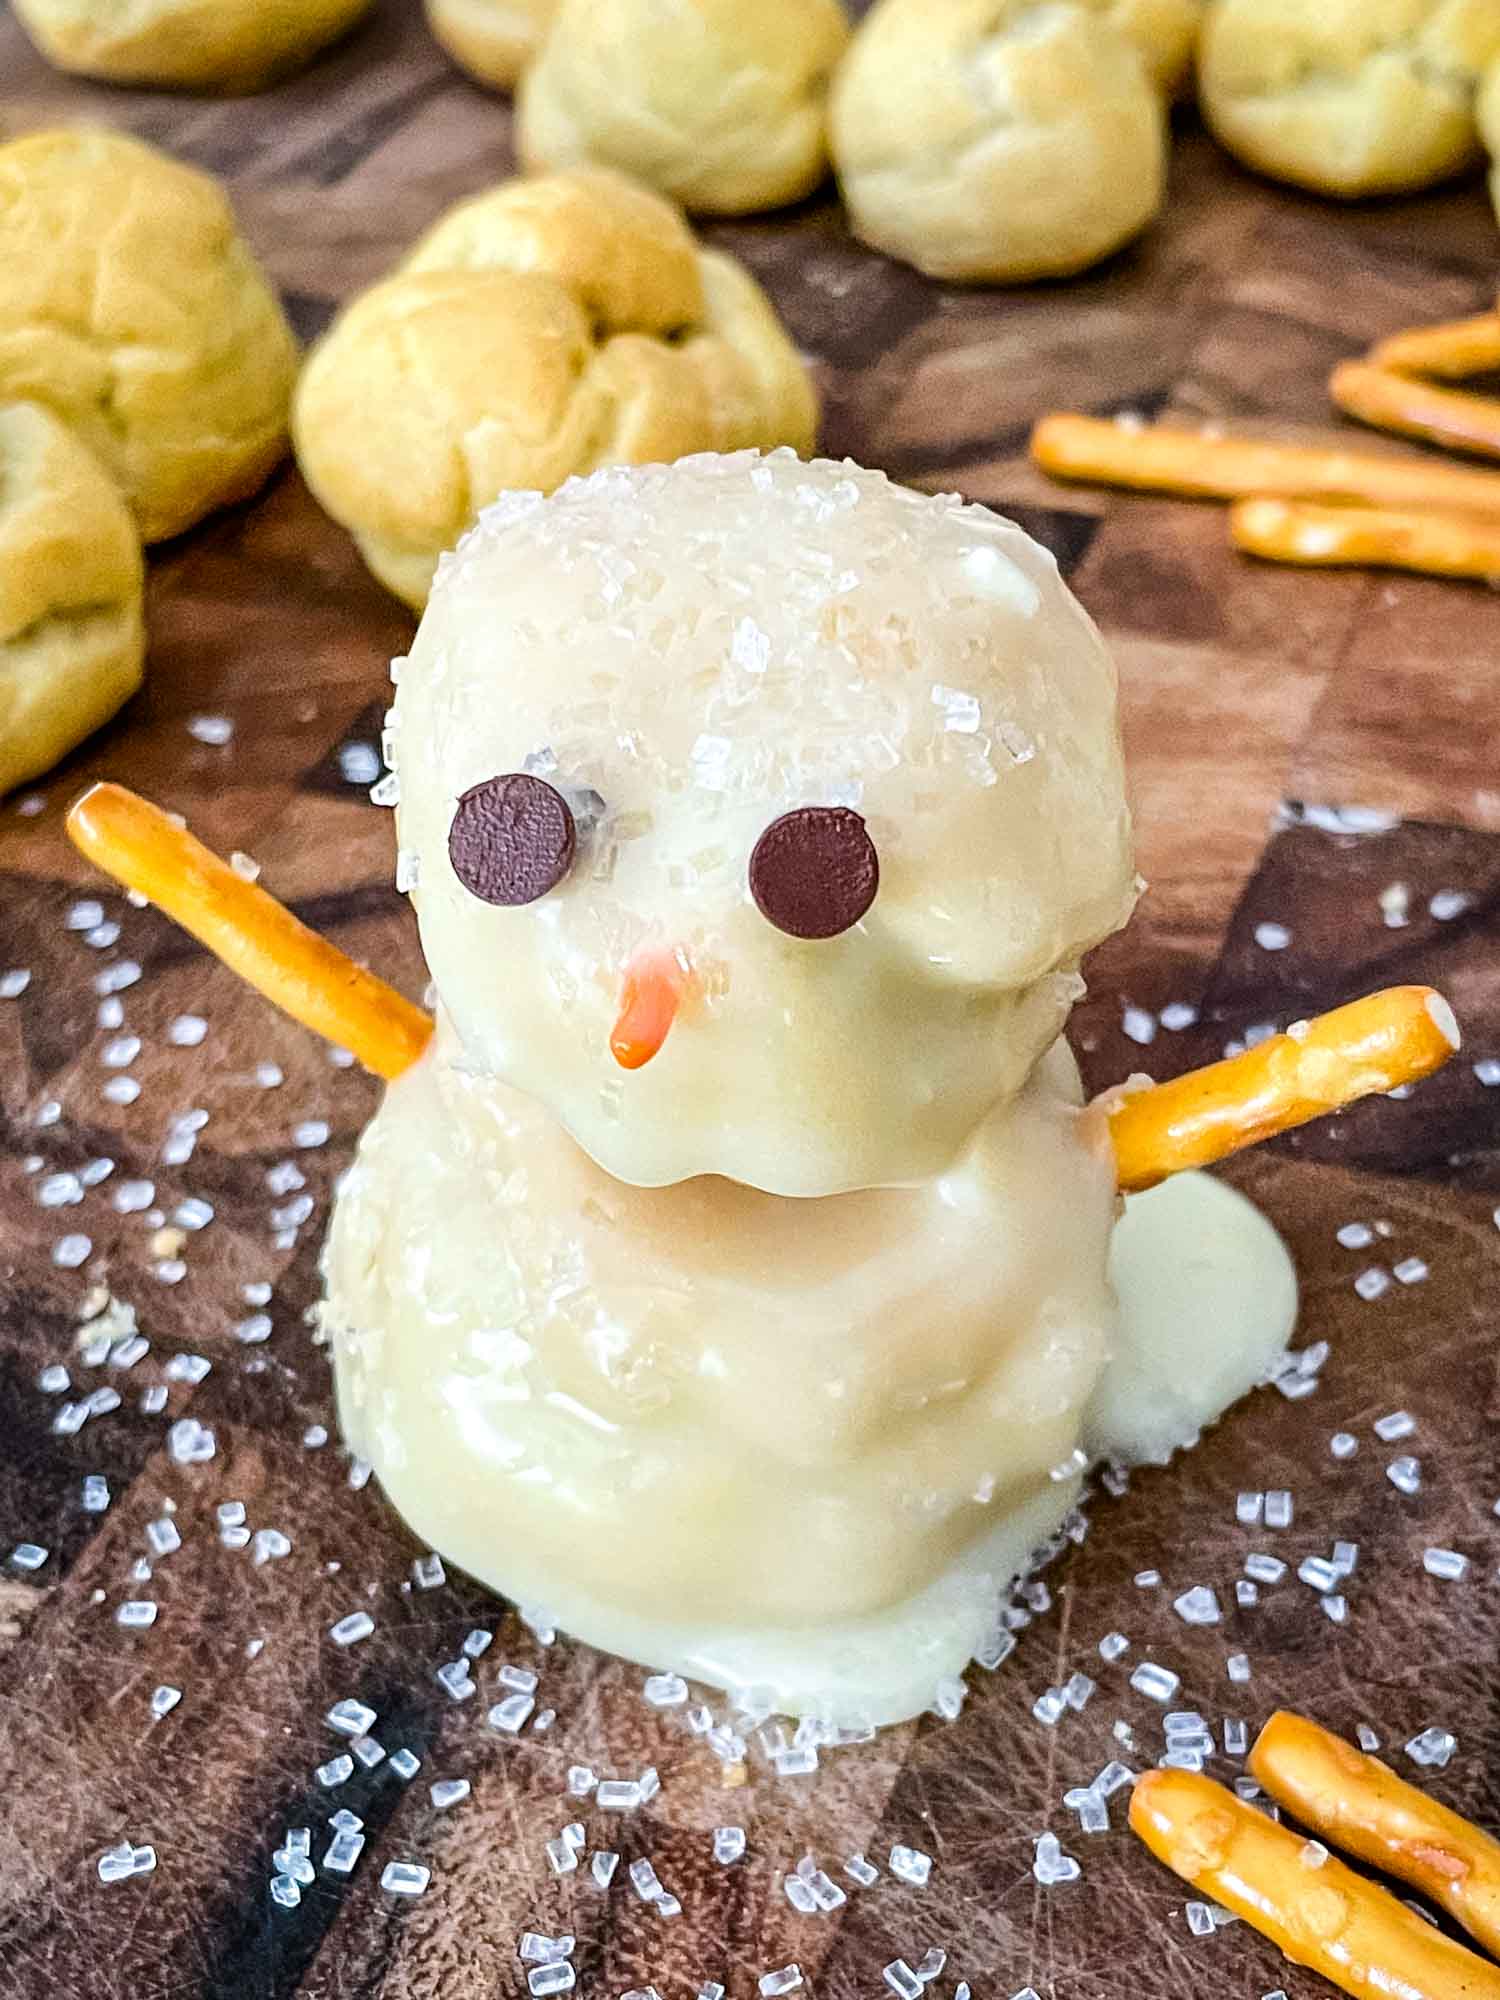 A Snowman Cream Puff on a cutting board